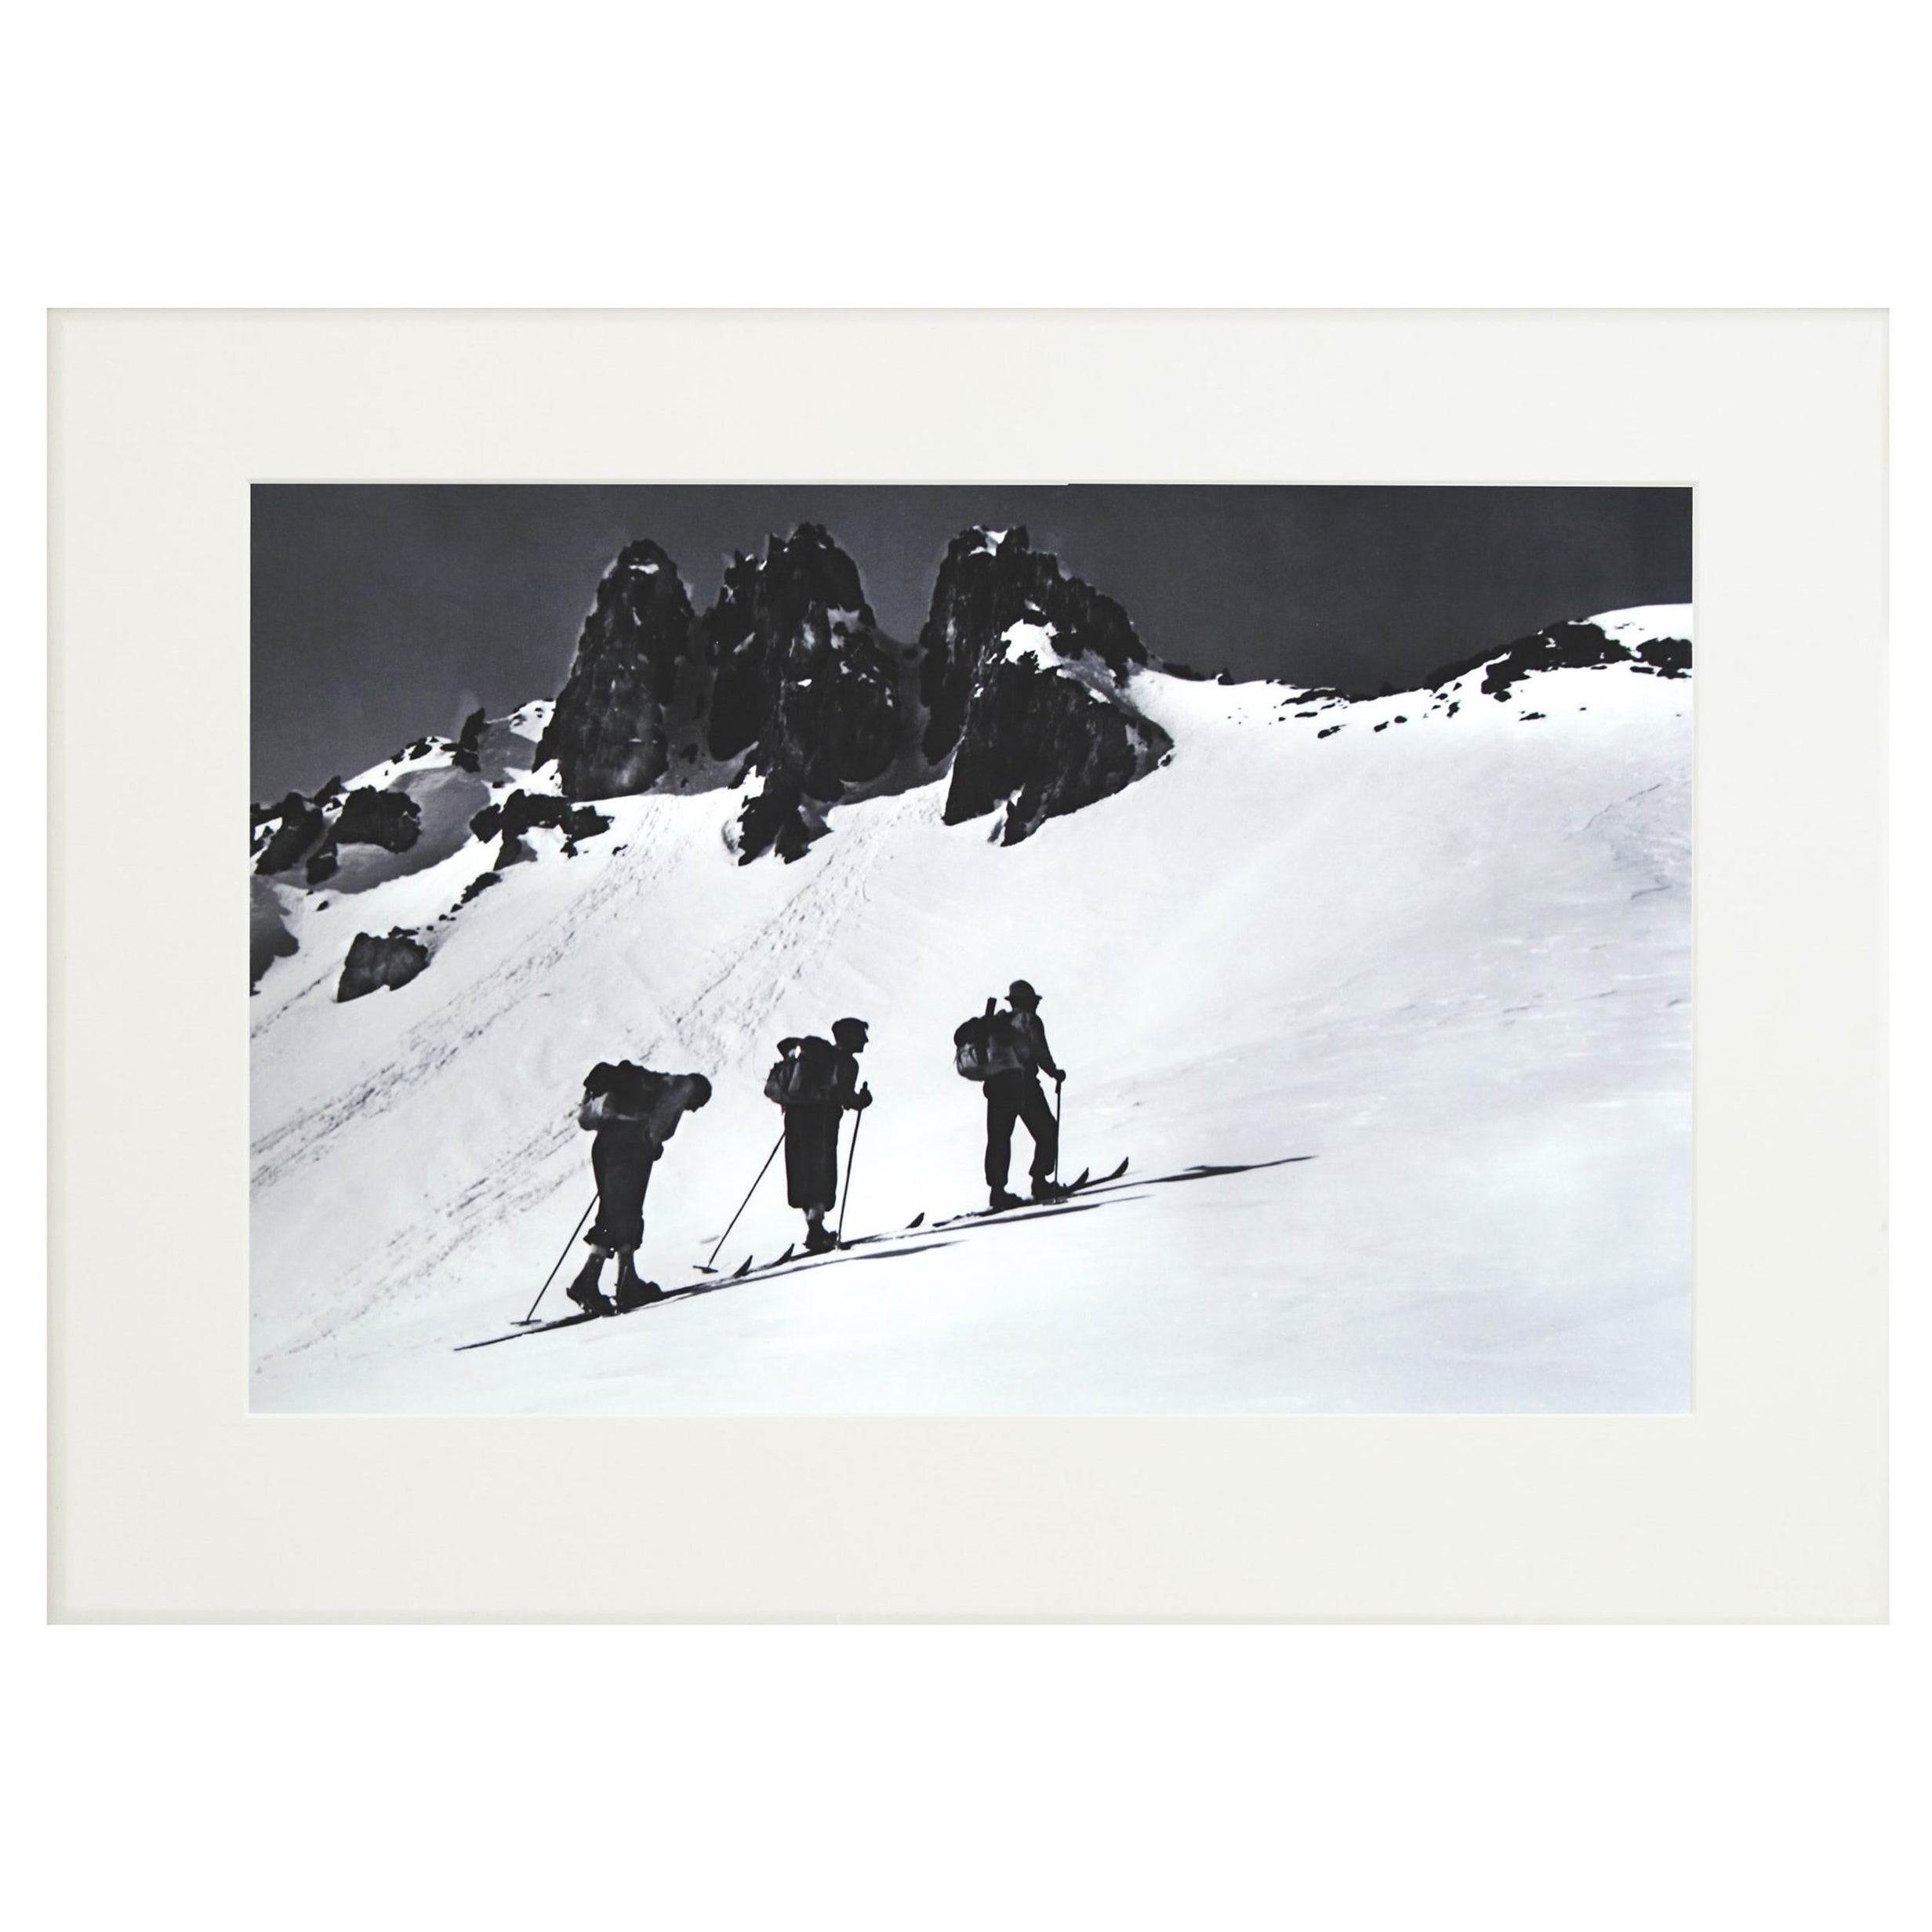 Alpine Ski Photograph, 'Three Peaks' Taken from 1930s Original